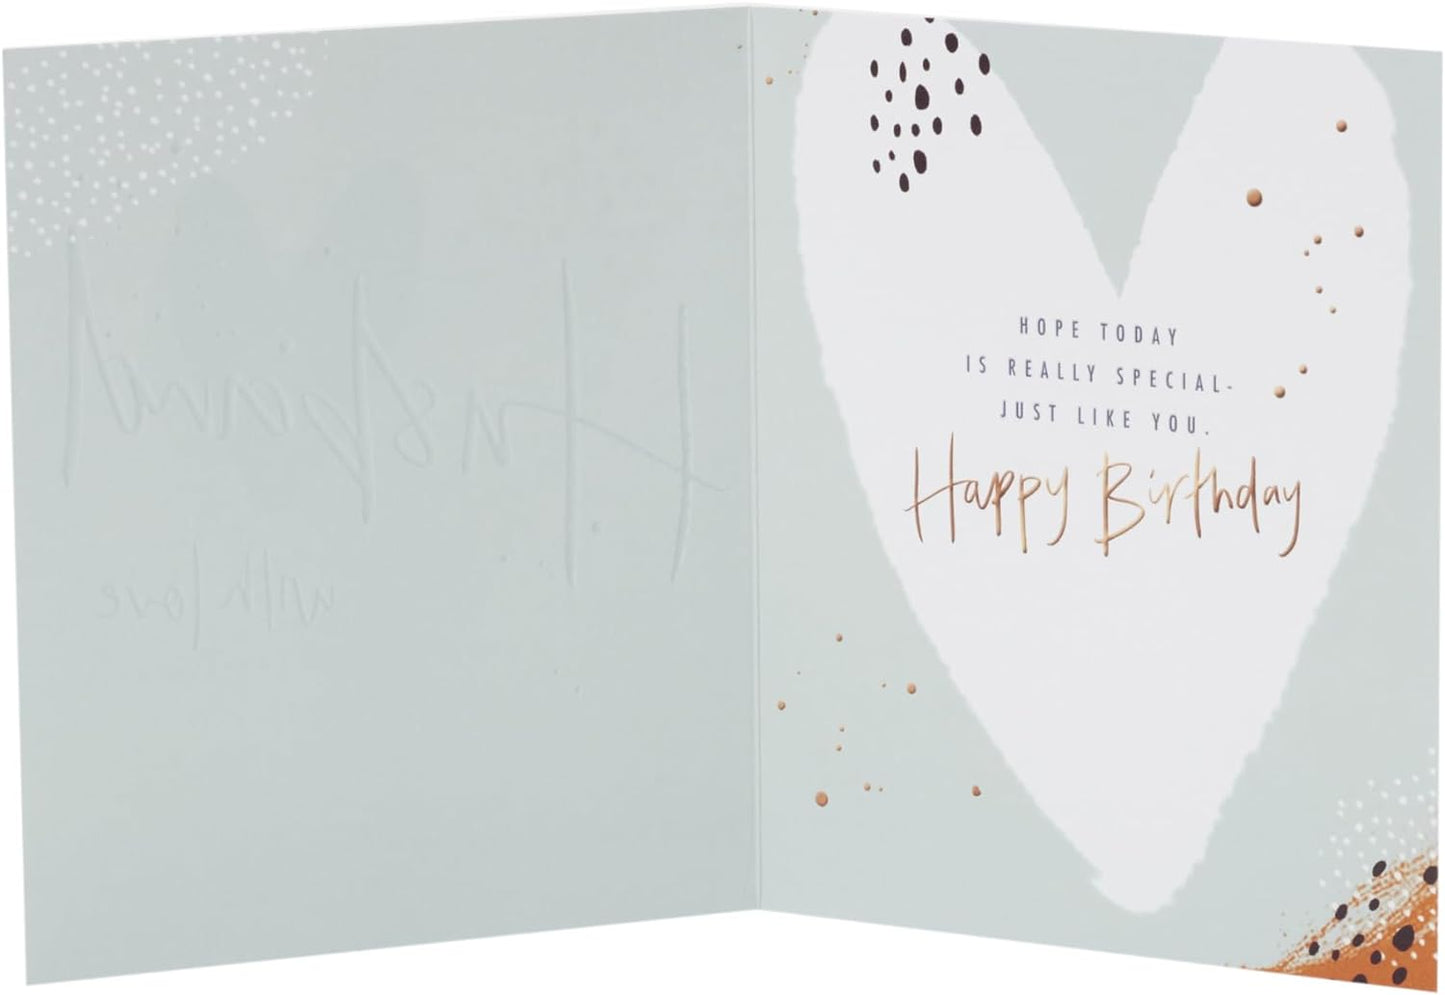 Hearts Design Husband Birthday Card